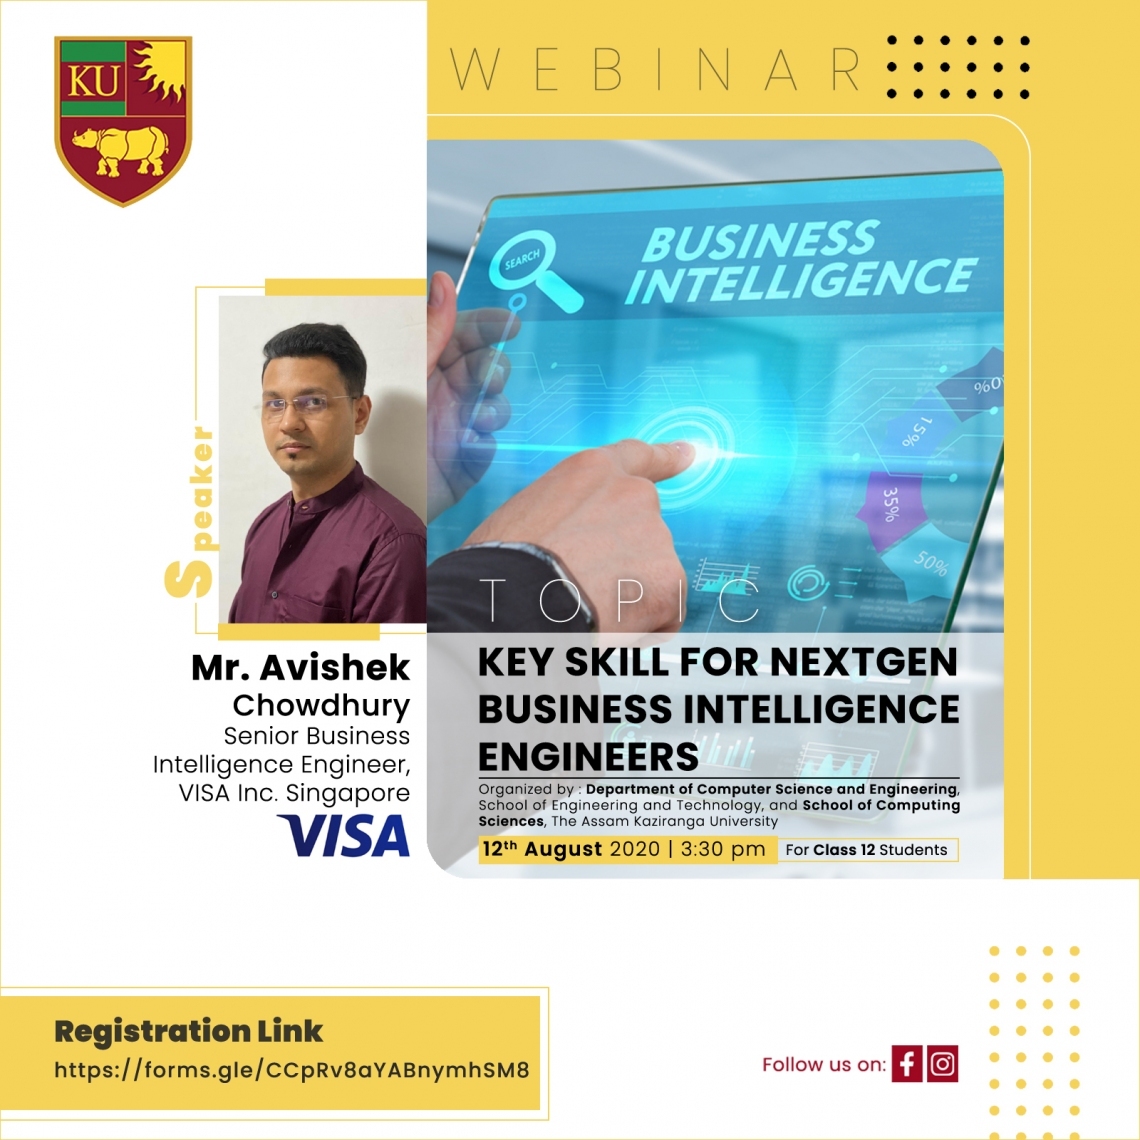 Webinar on, "Key Skill for NextGen Business Intelligence Engineers" with Mr. Avishek Chowdhury, Senior Business Intelligence Engineer, VISA Inc. Singapore